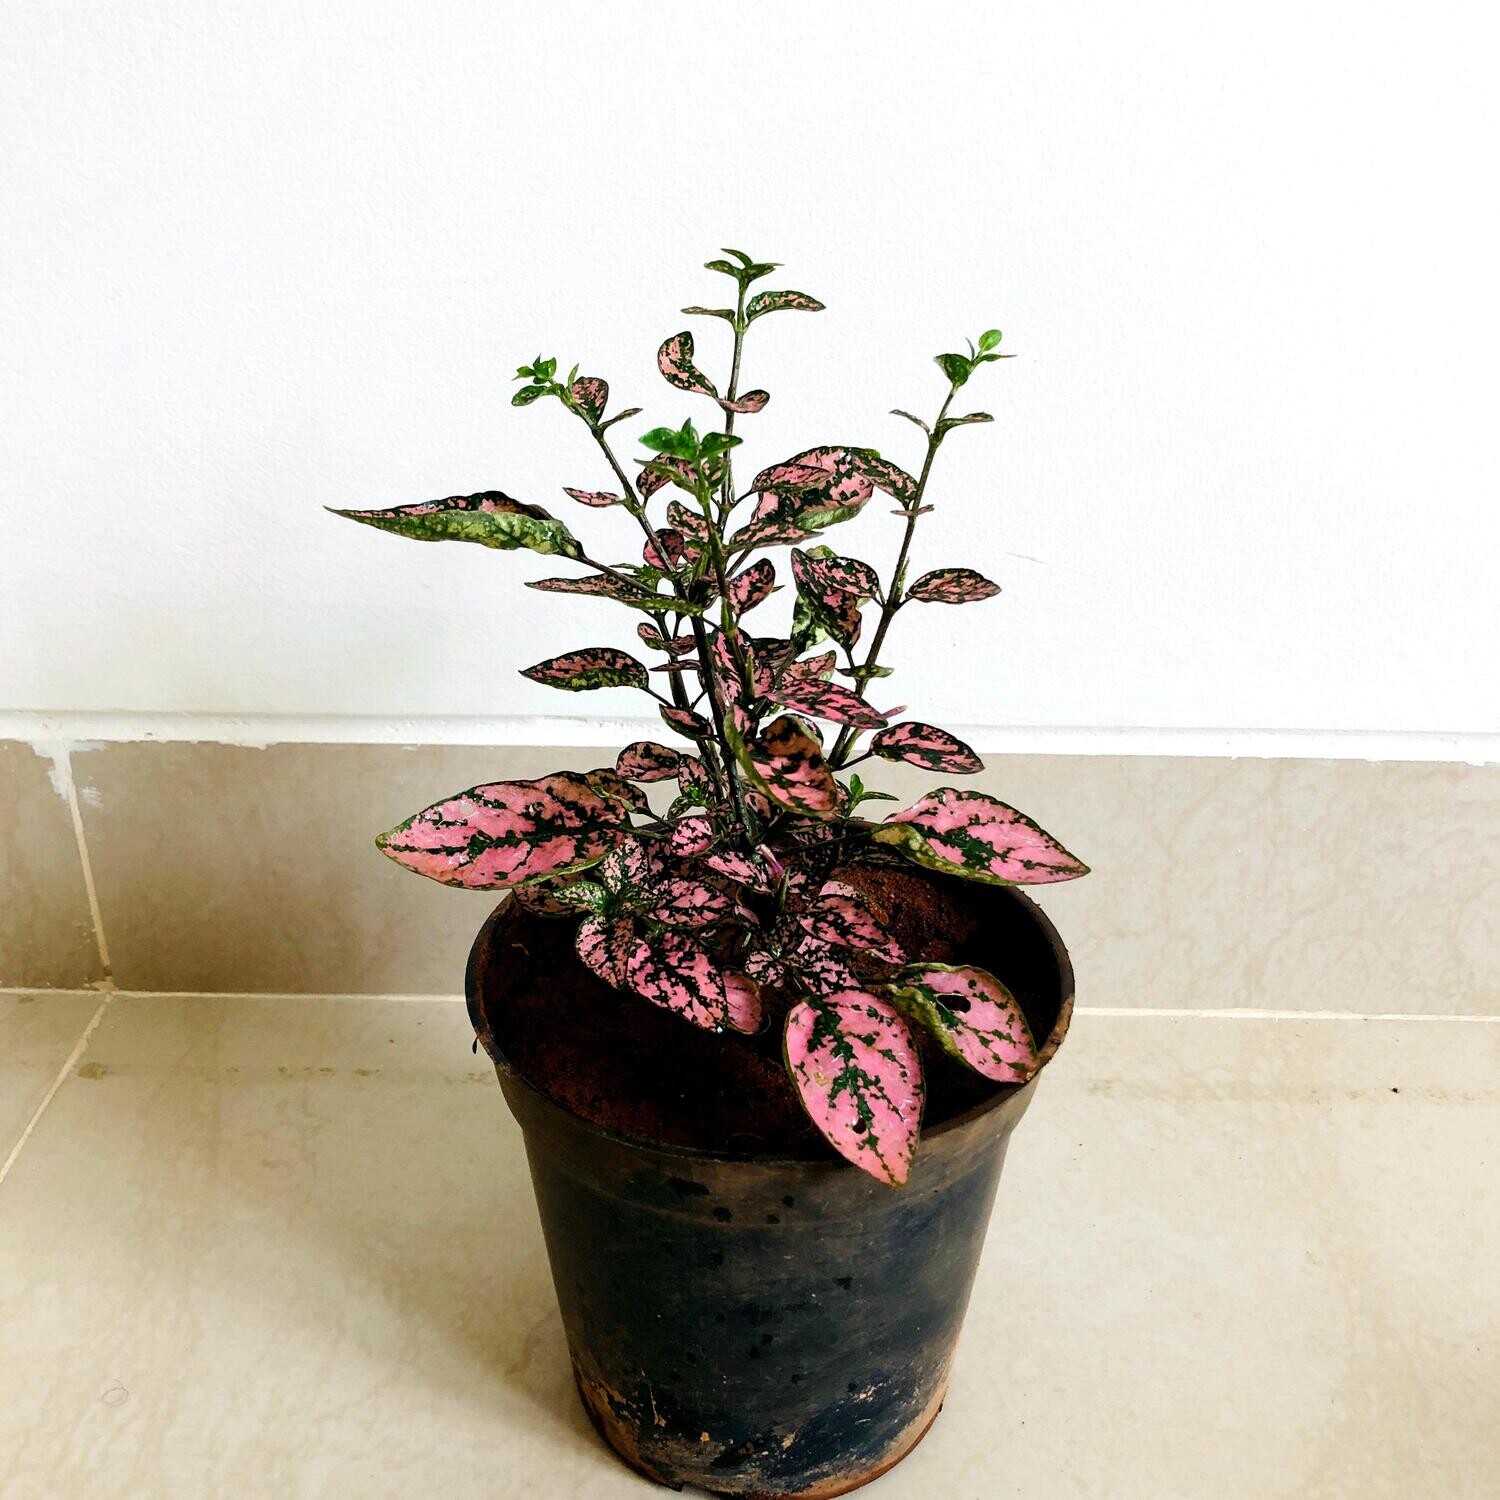 Polka Dot Plant in 4 inches Nursery Pot